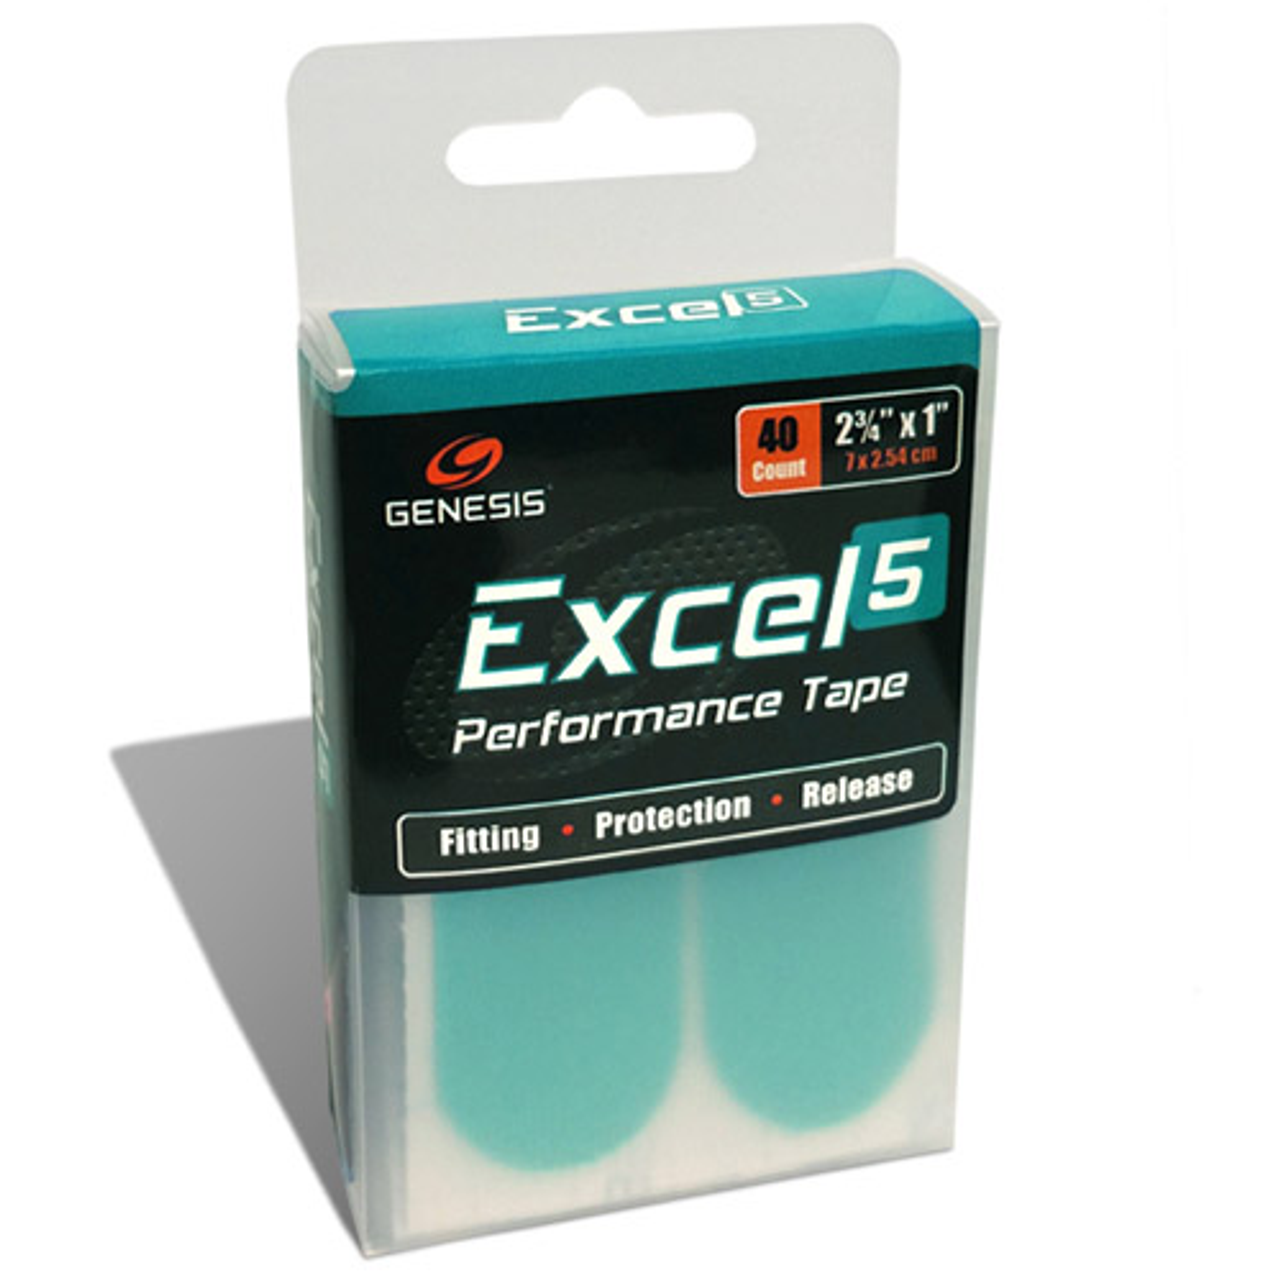 Genesis Excel 5 Performance Tape Mint